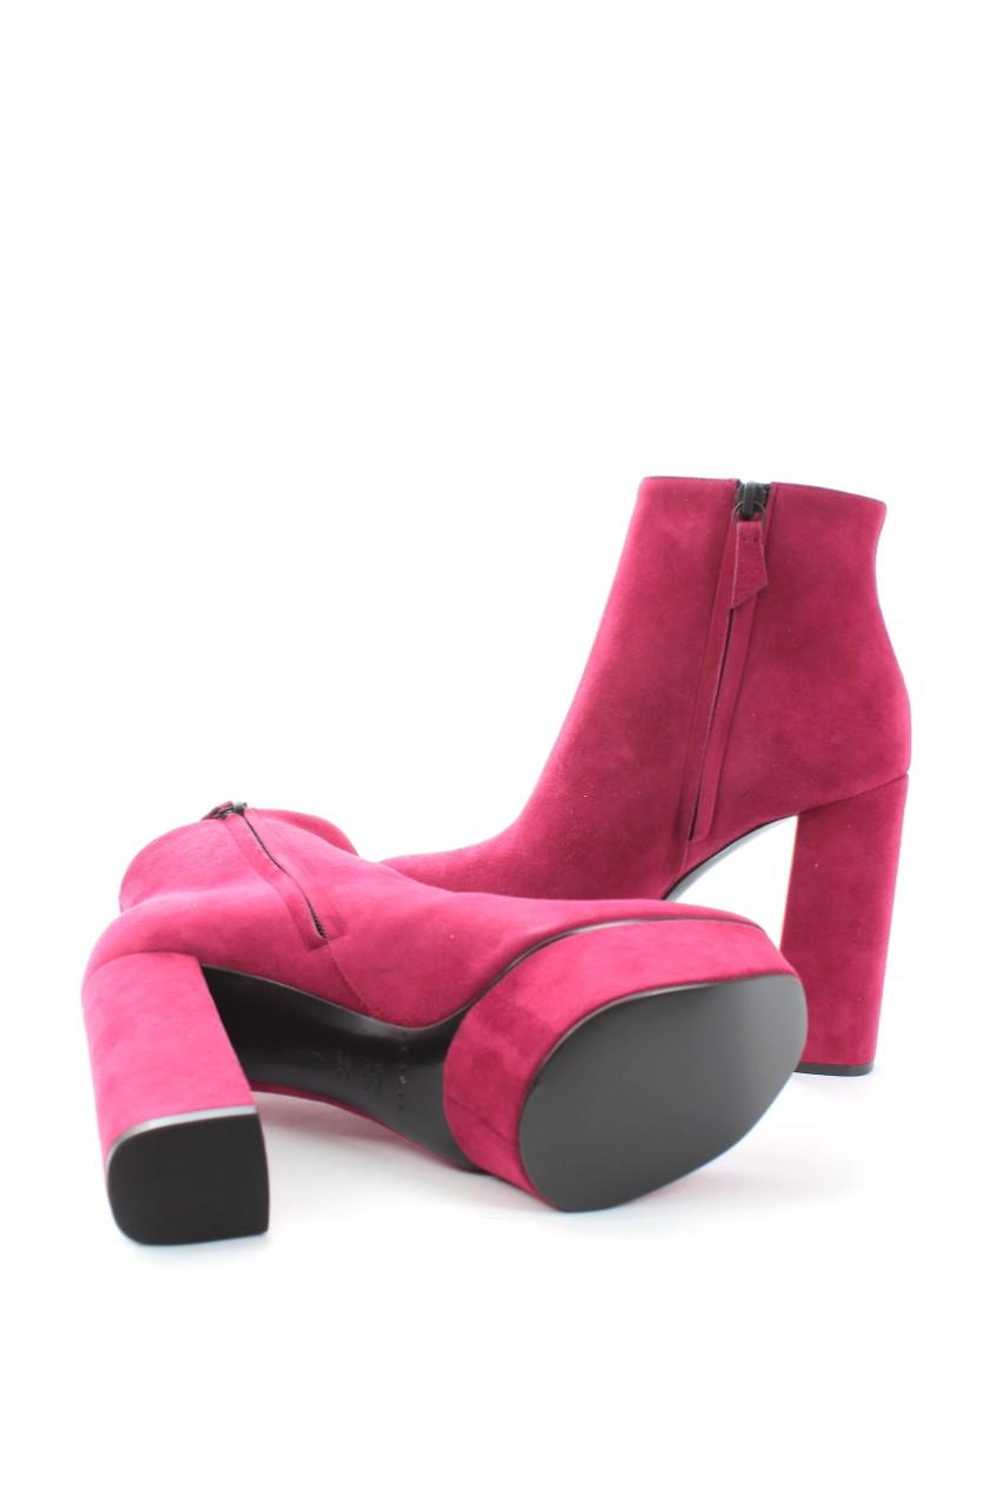 Casadei Casadei pink suede platform ankle boots - image 4